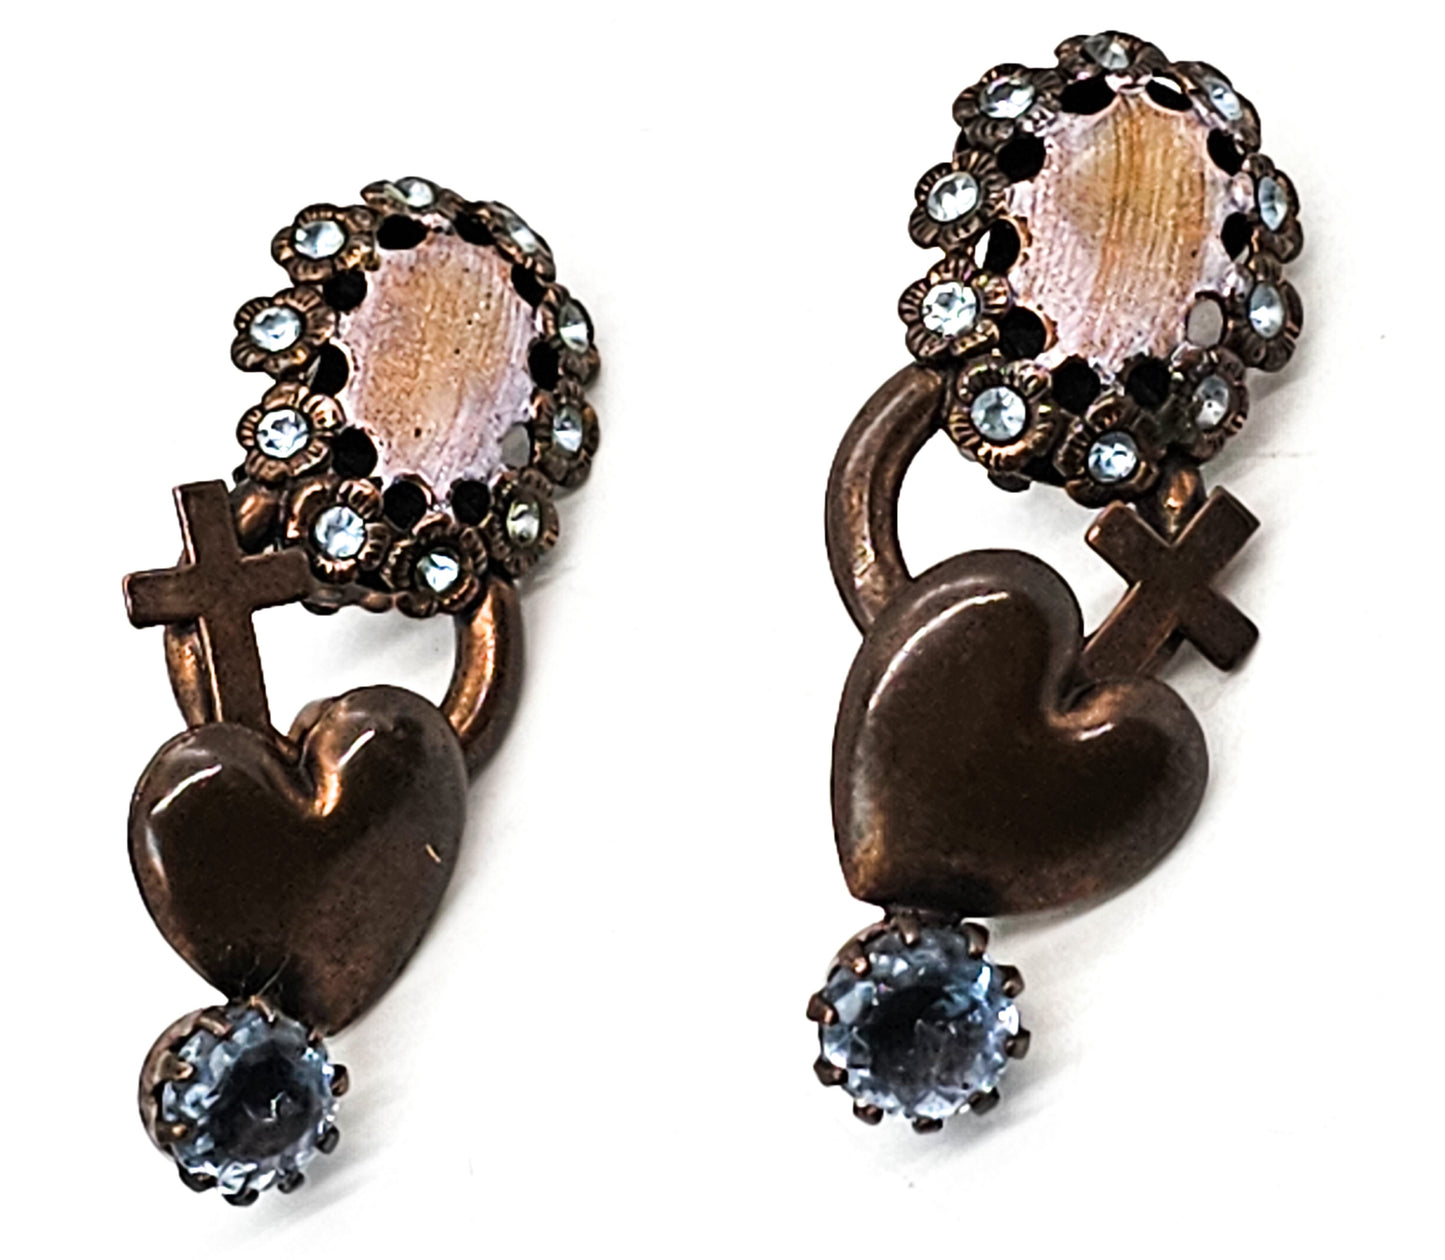 Reminiscence Zoe Coste Heart Cross Made in France vintage clip on earrings